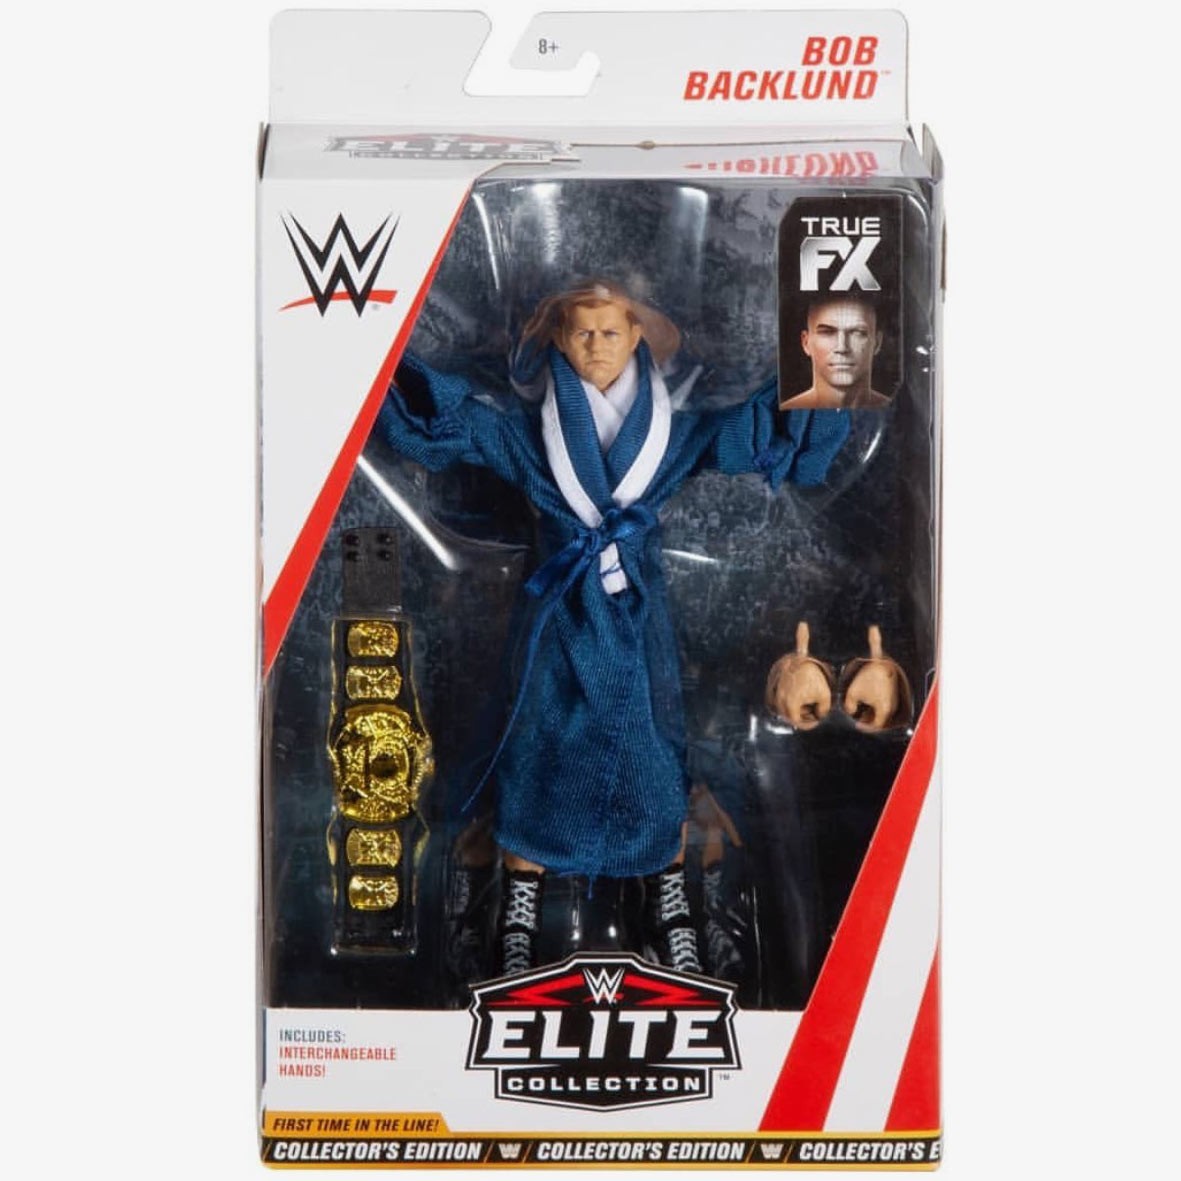 Bob Backlund WWE Elite Collection Exclusive